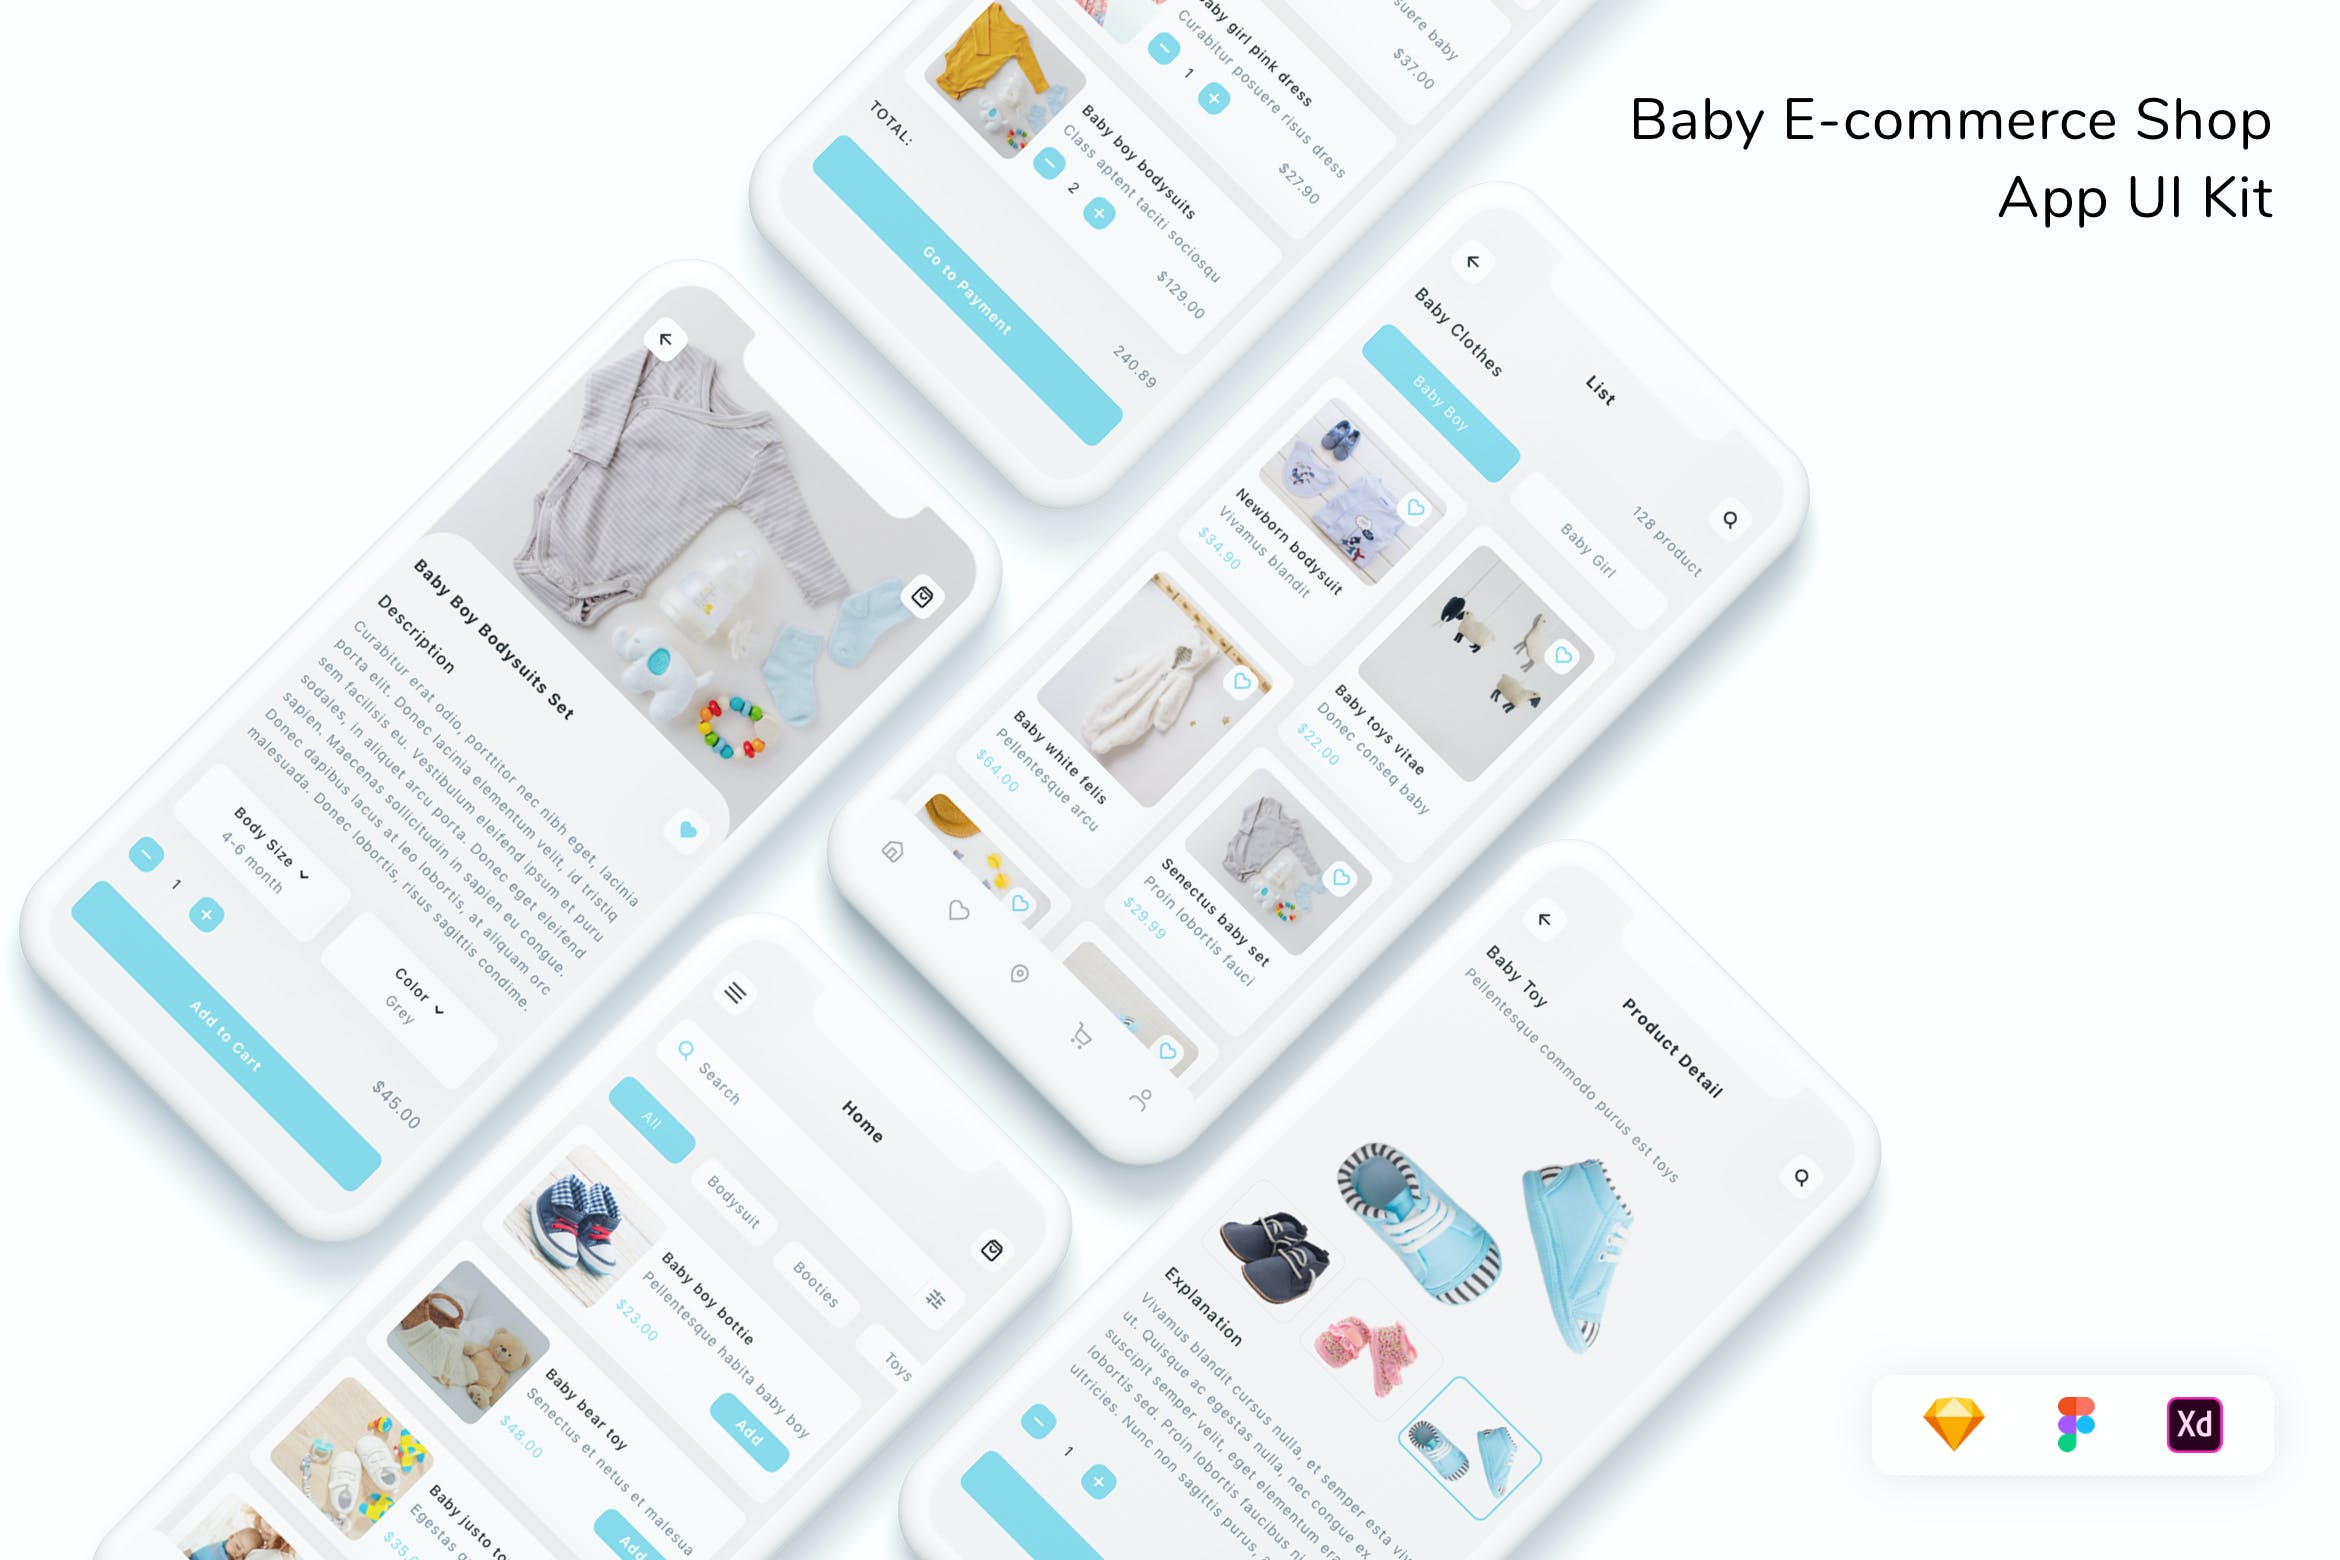 婴儿用品商店电商App设计UI套件 Baby E-commerce Shop App UI Kit